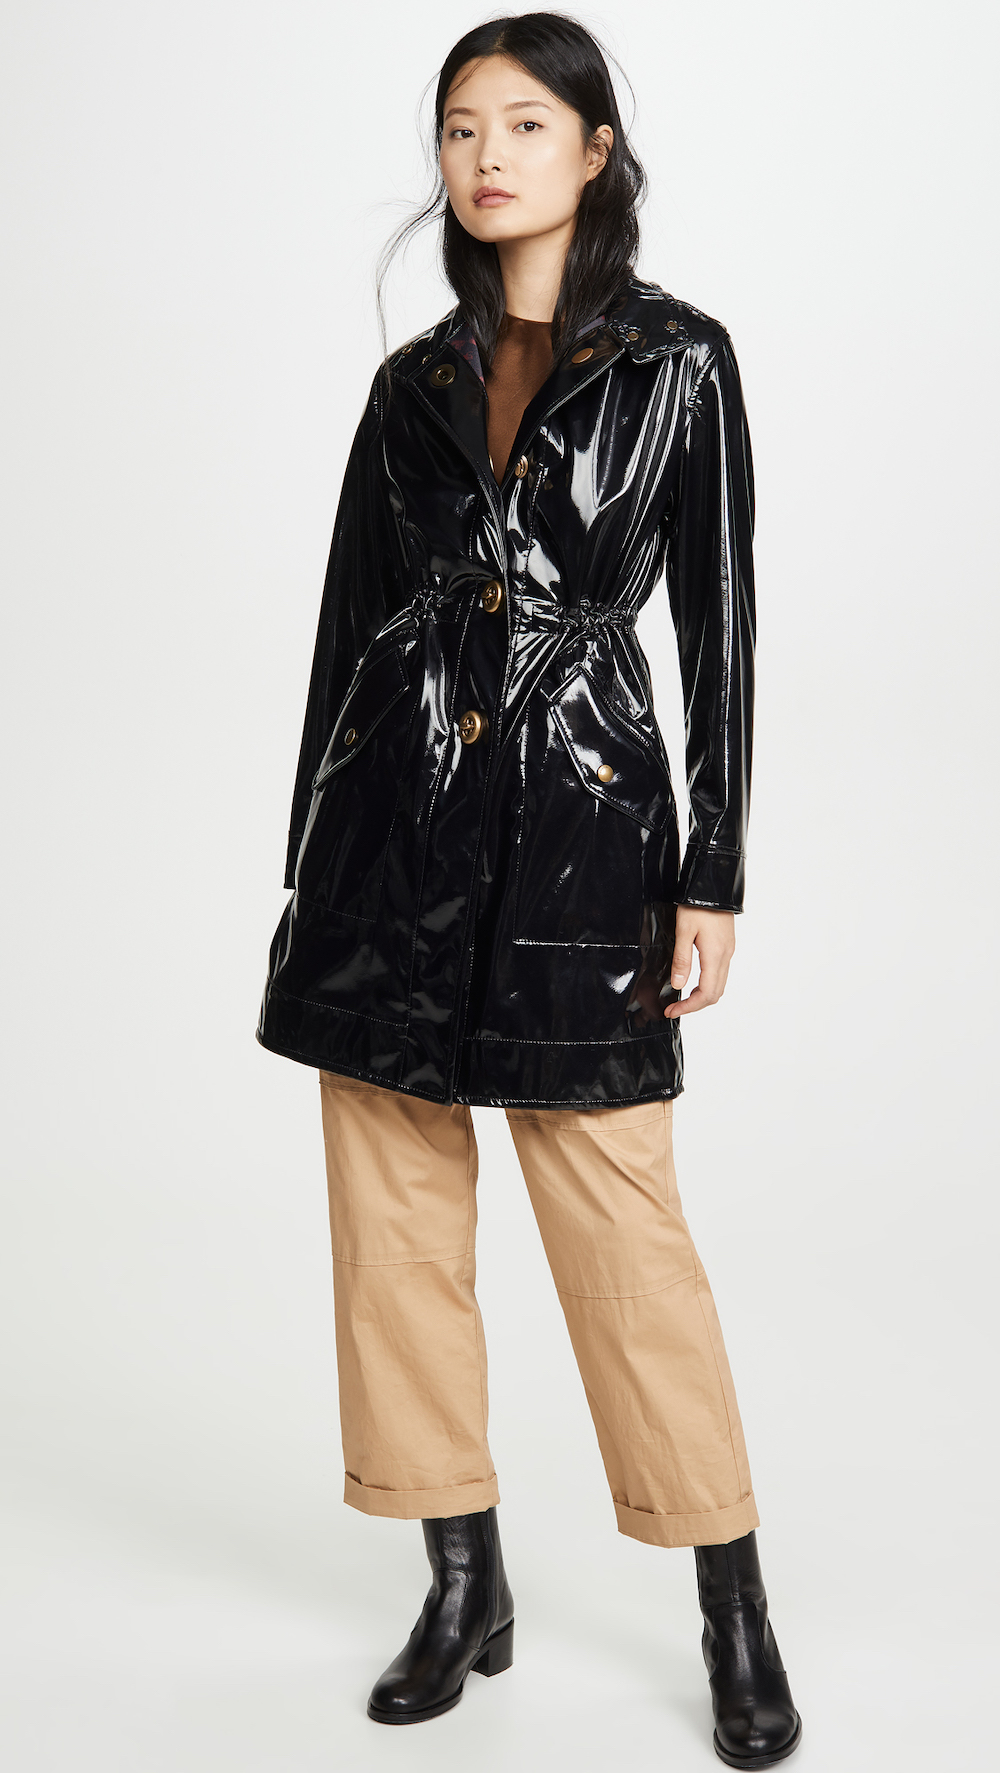 15 Super Stylish Raincoats for Fashion Folk - theFashionSpot